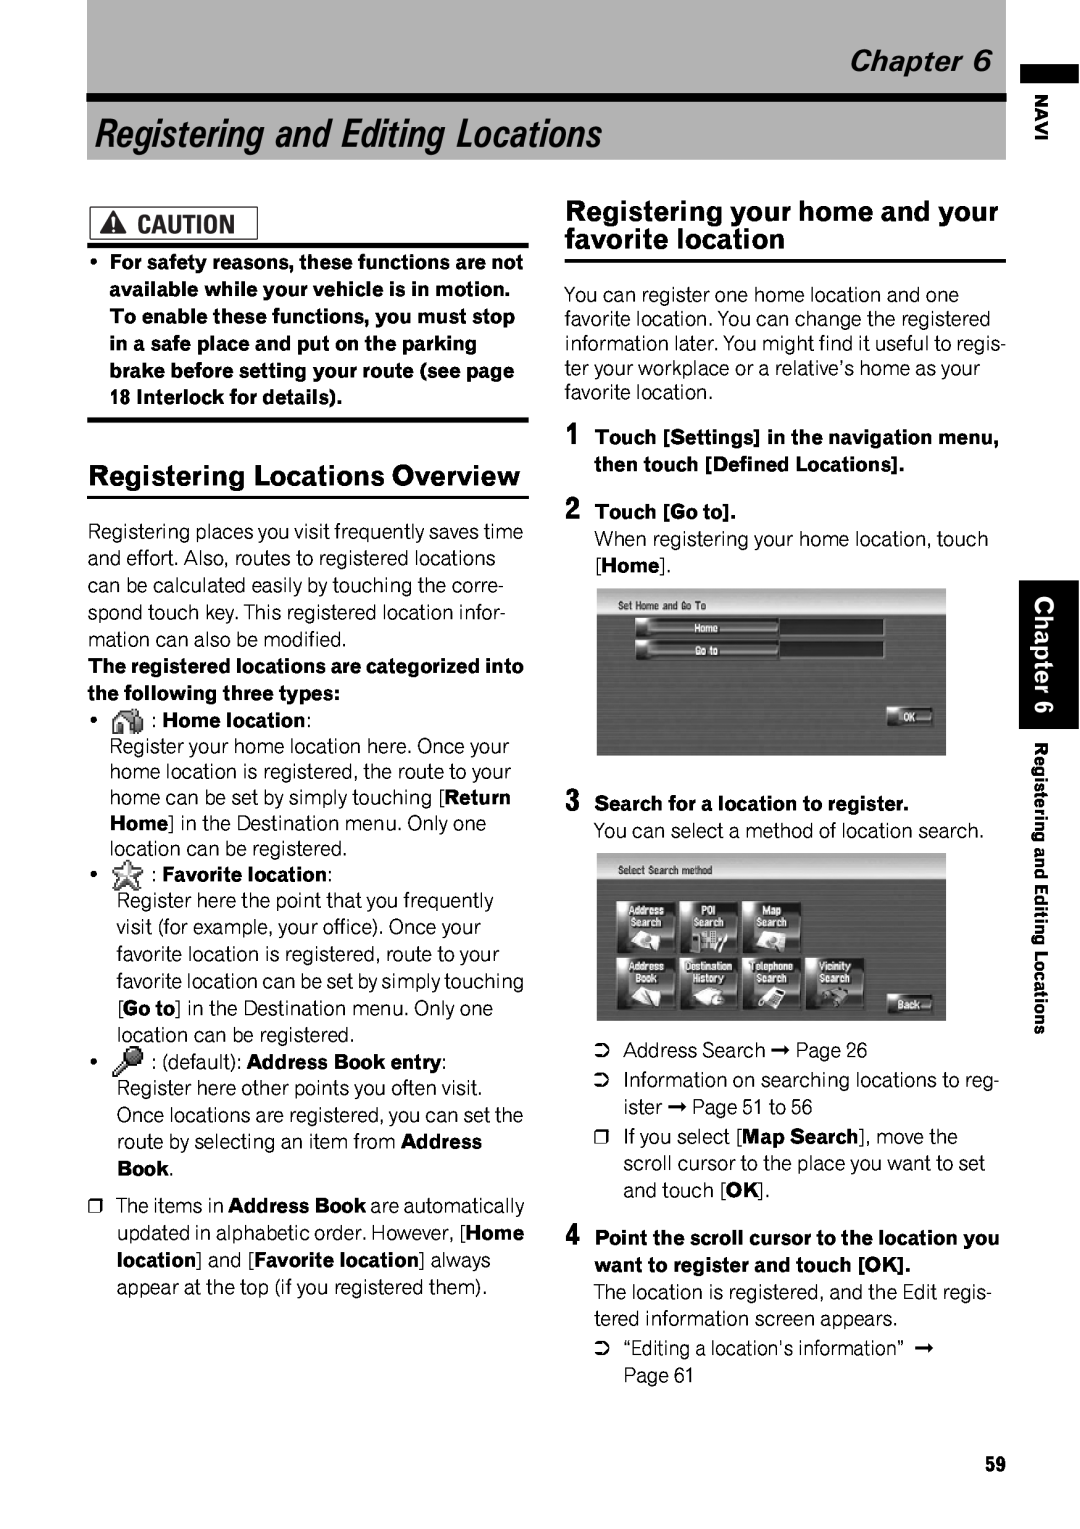 Pioneer AVIC-Z1 operation manual Registering and Editing Locations, Registering Locations Overview, Chapter 